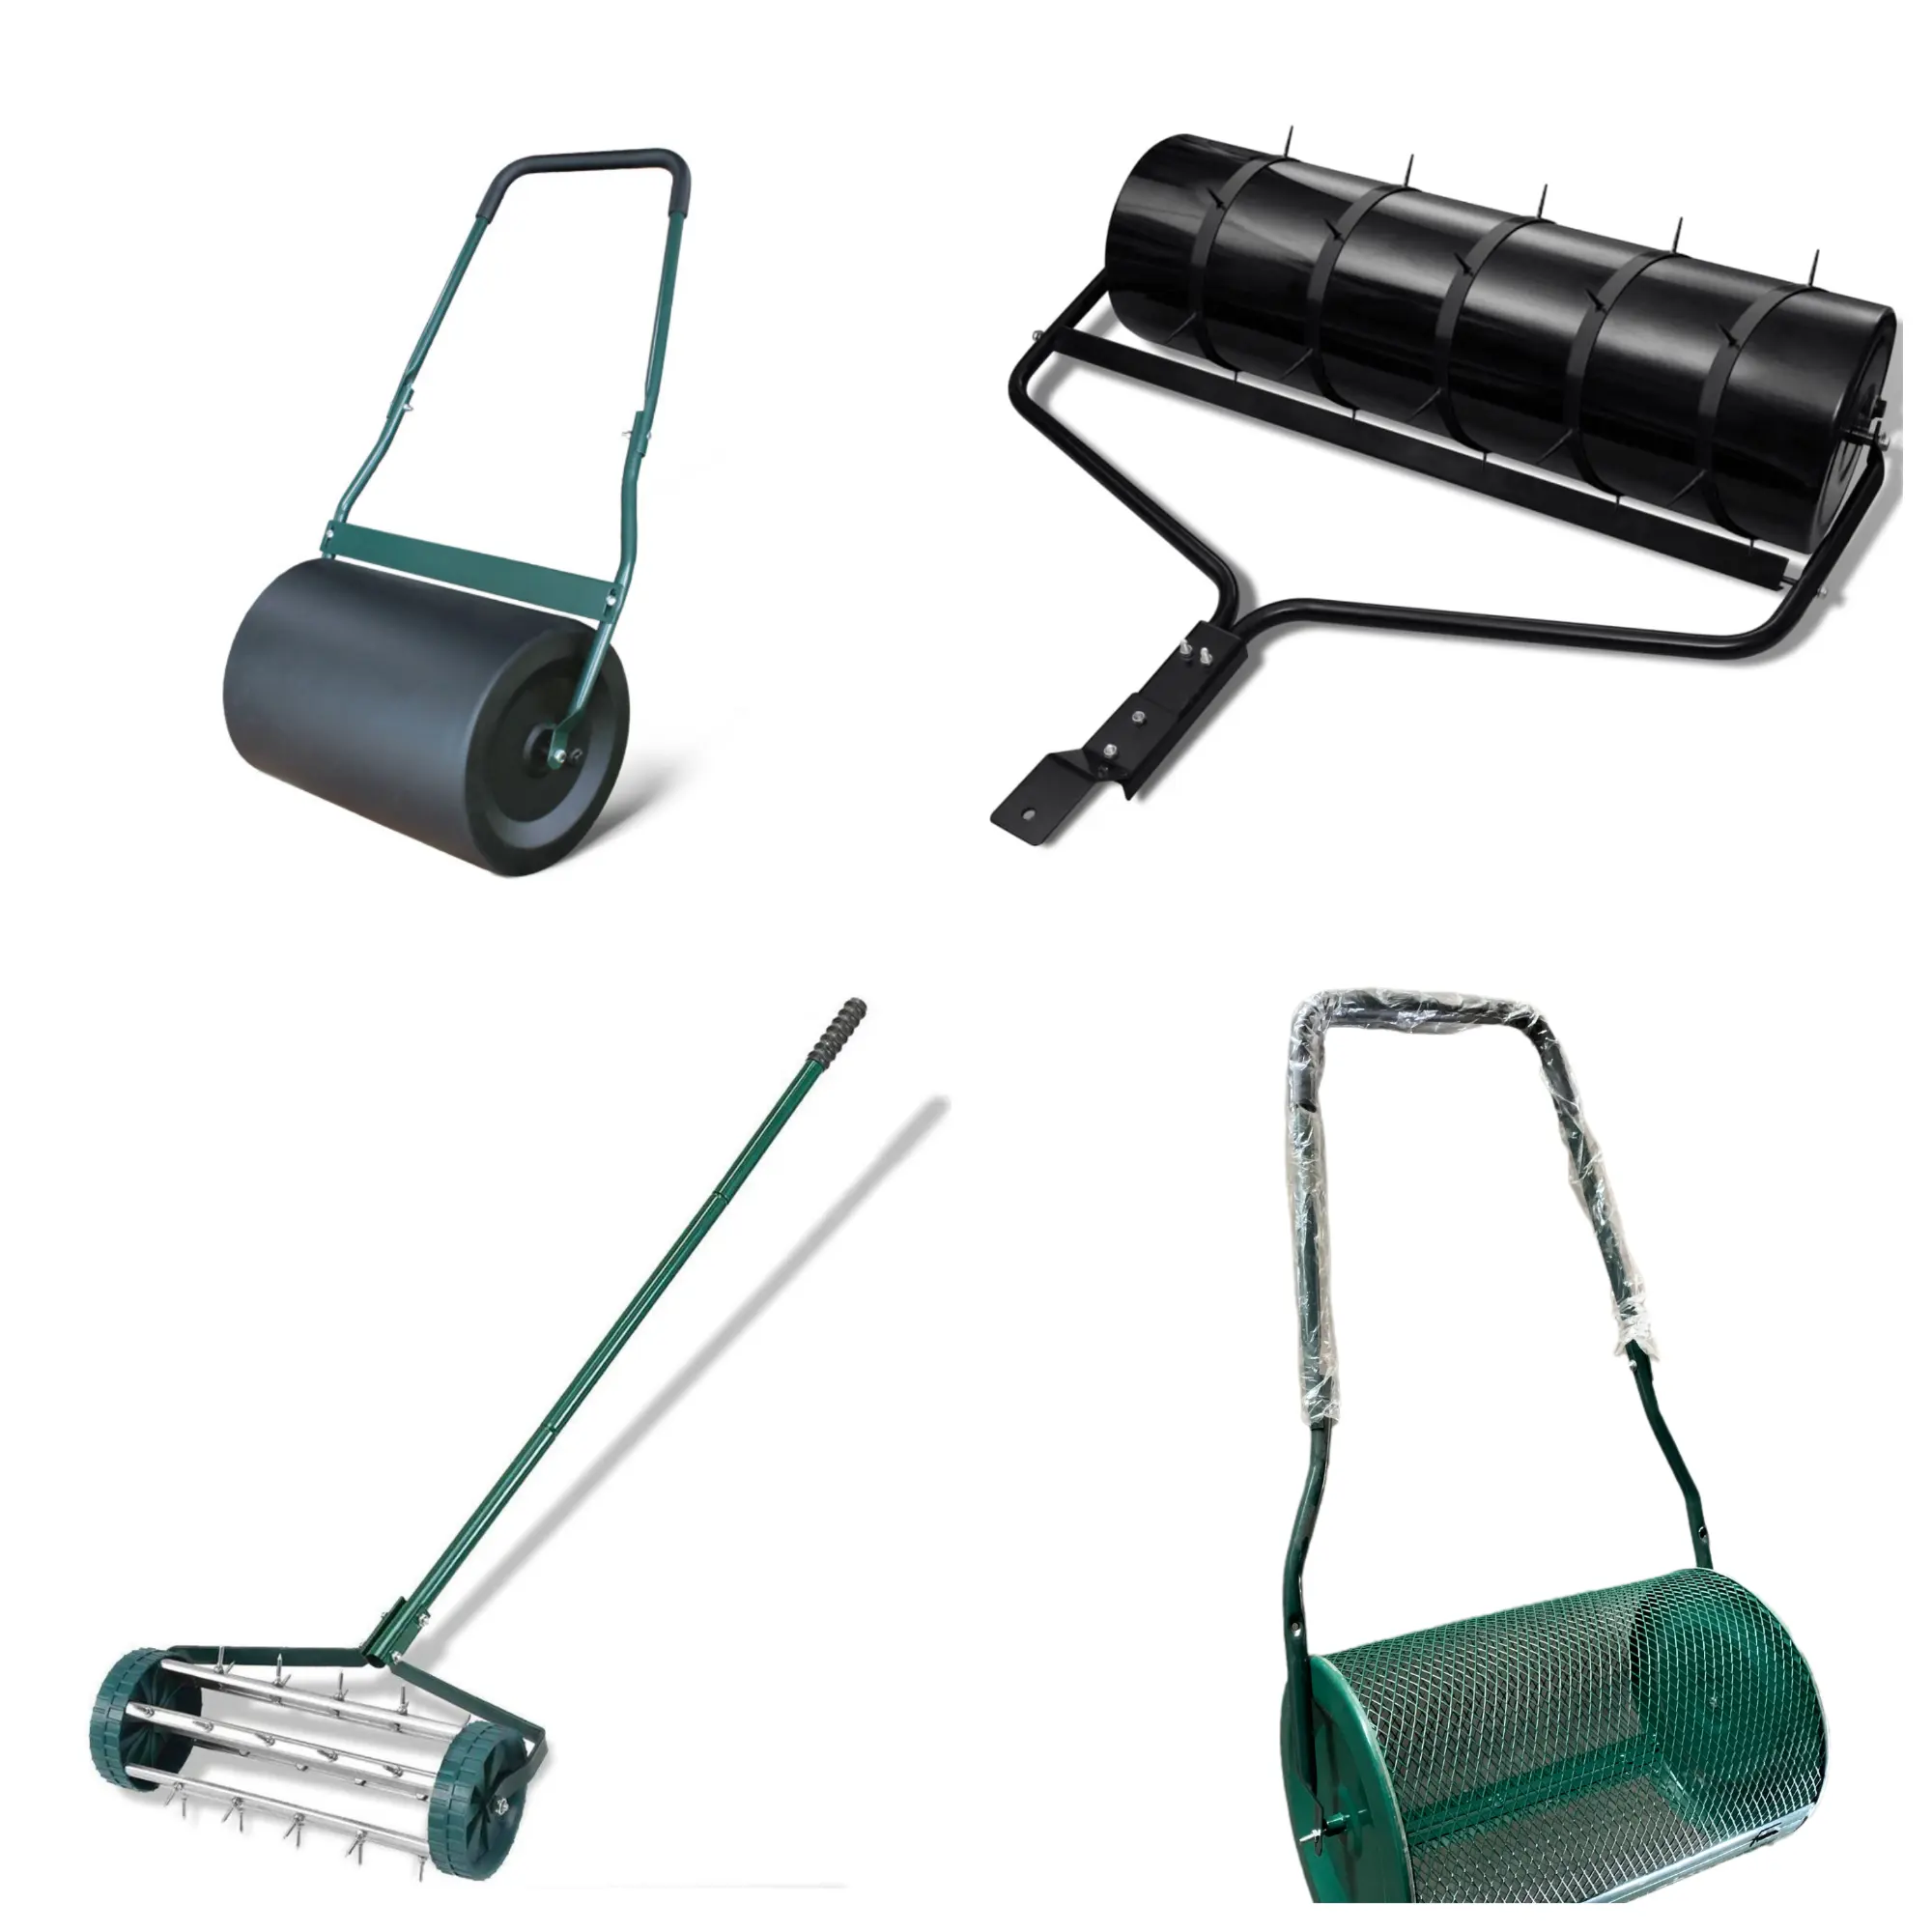 Spreader Roller torpeat Moss Spreader Metal Mesh Spreader lawn roller lawn aeratore